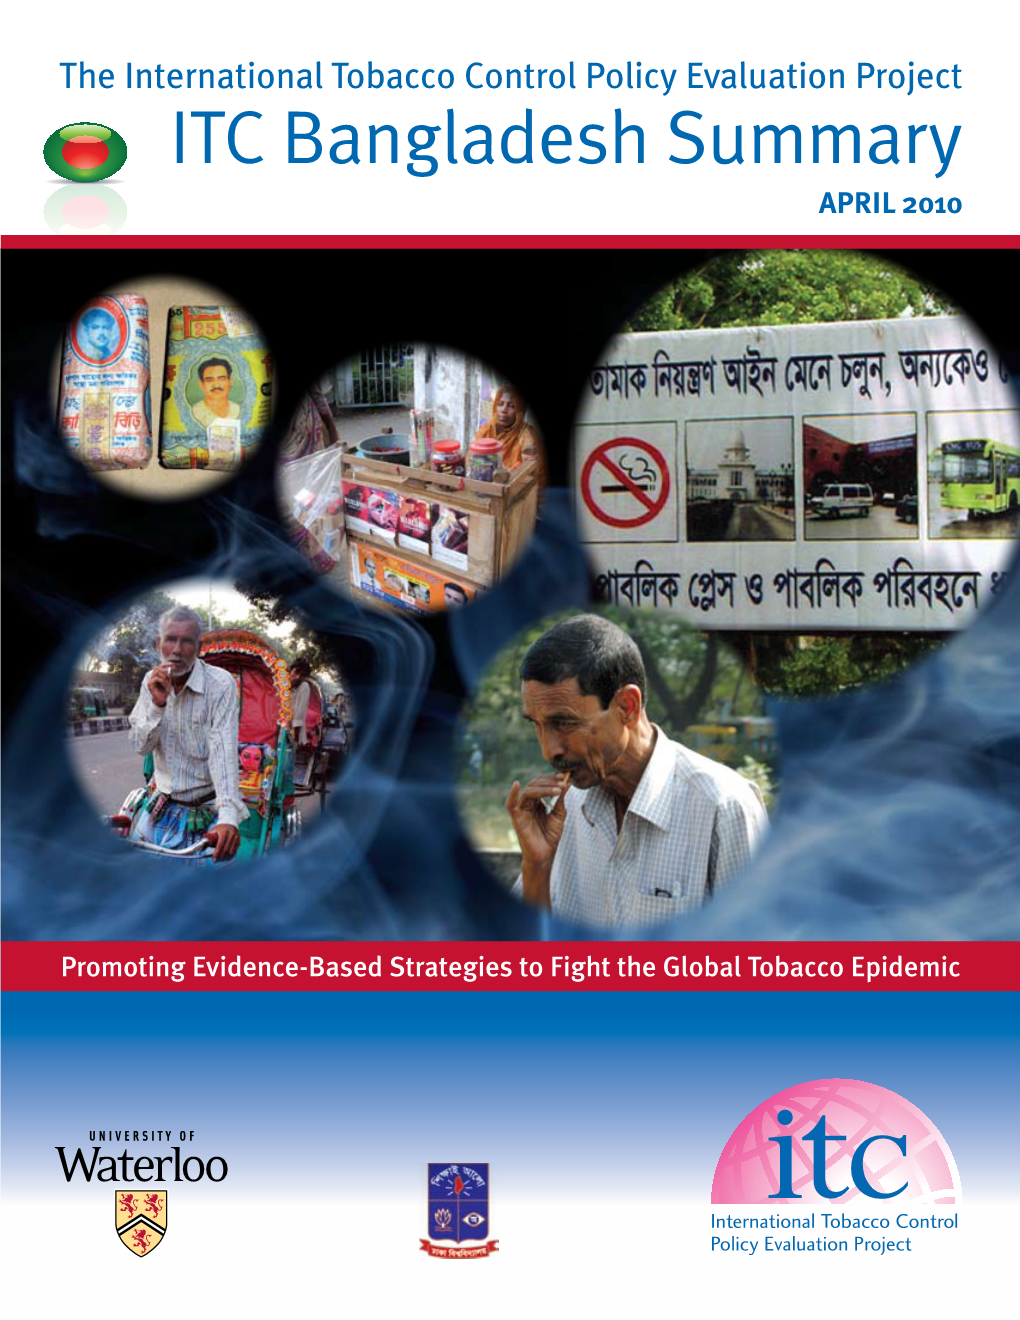 ITC Bangladesh Summary April 2010